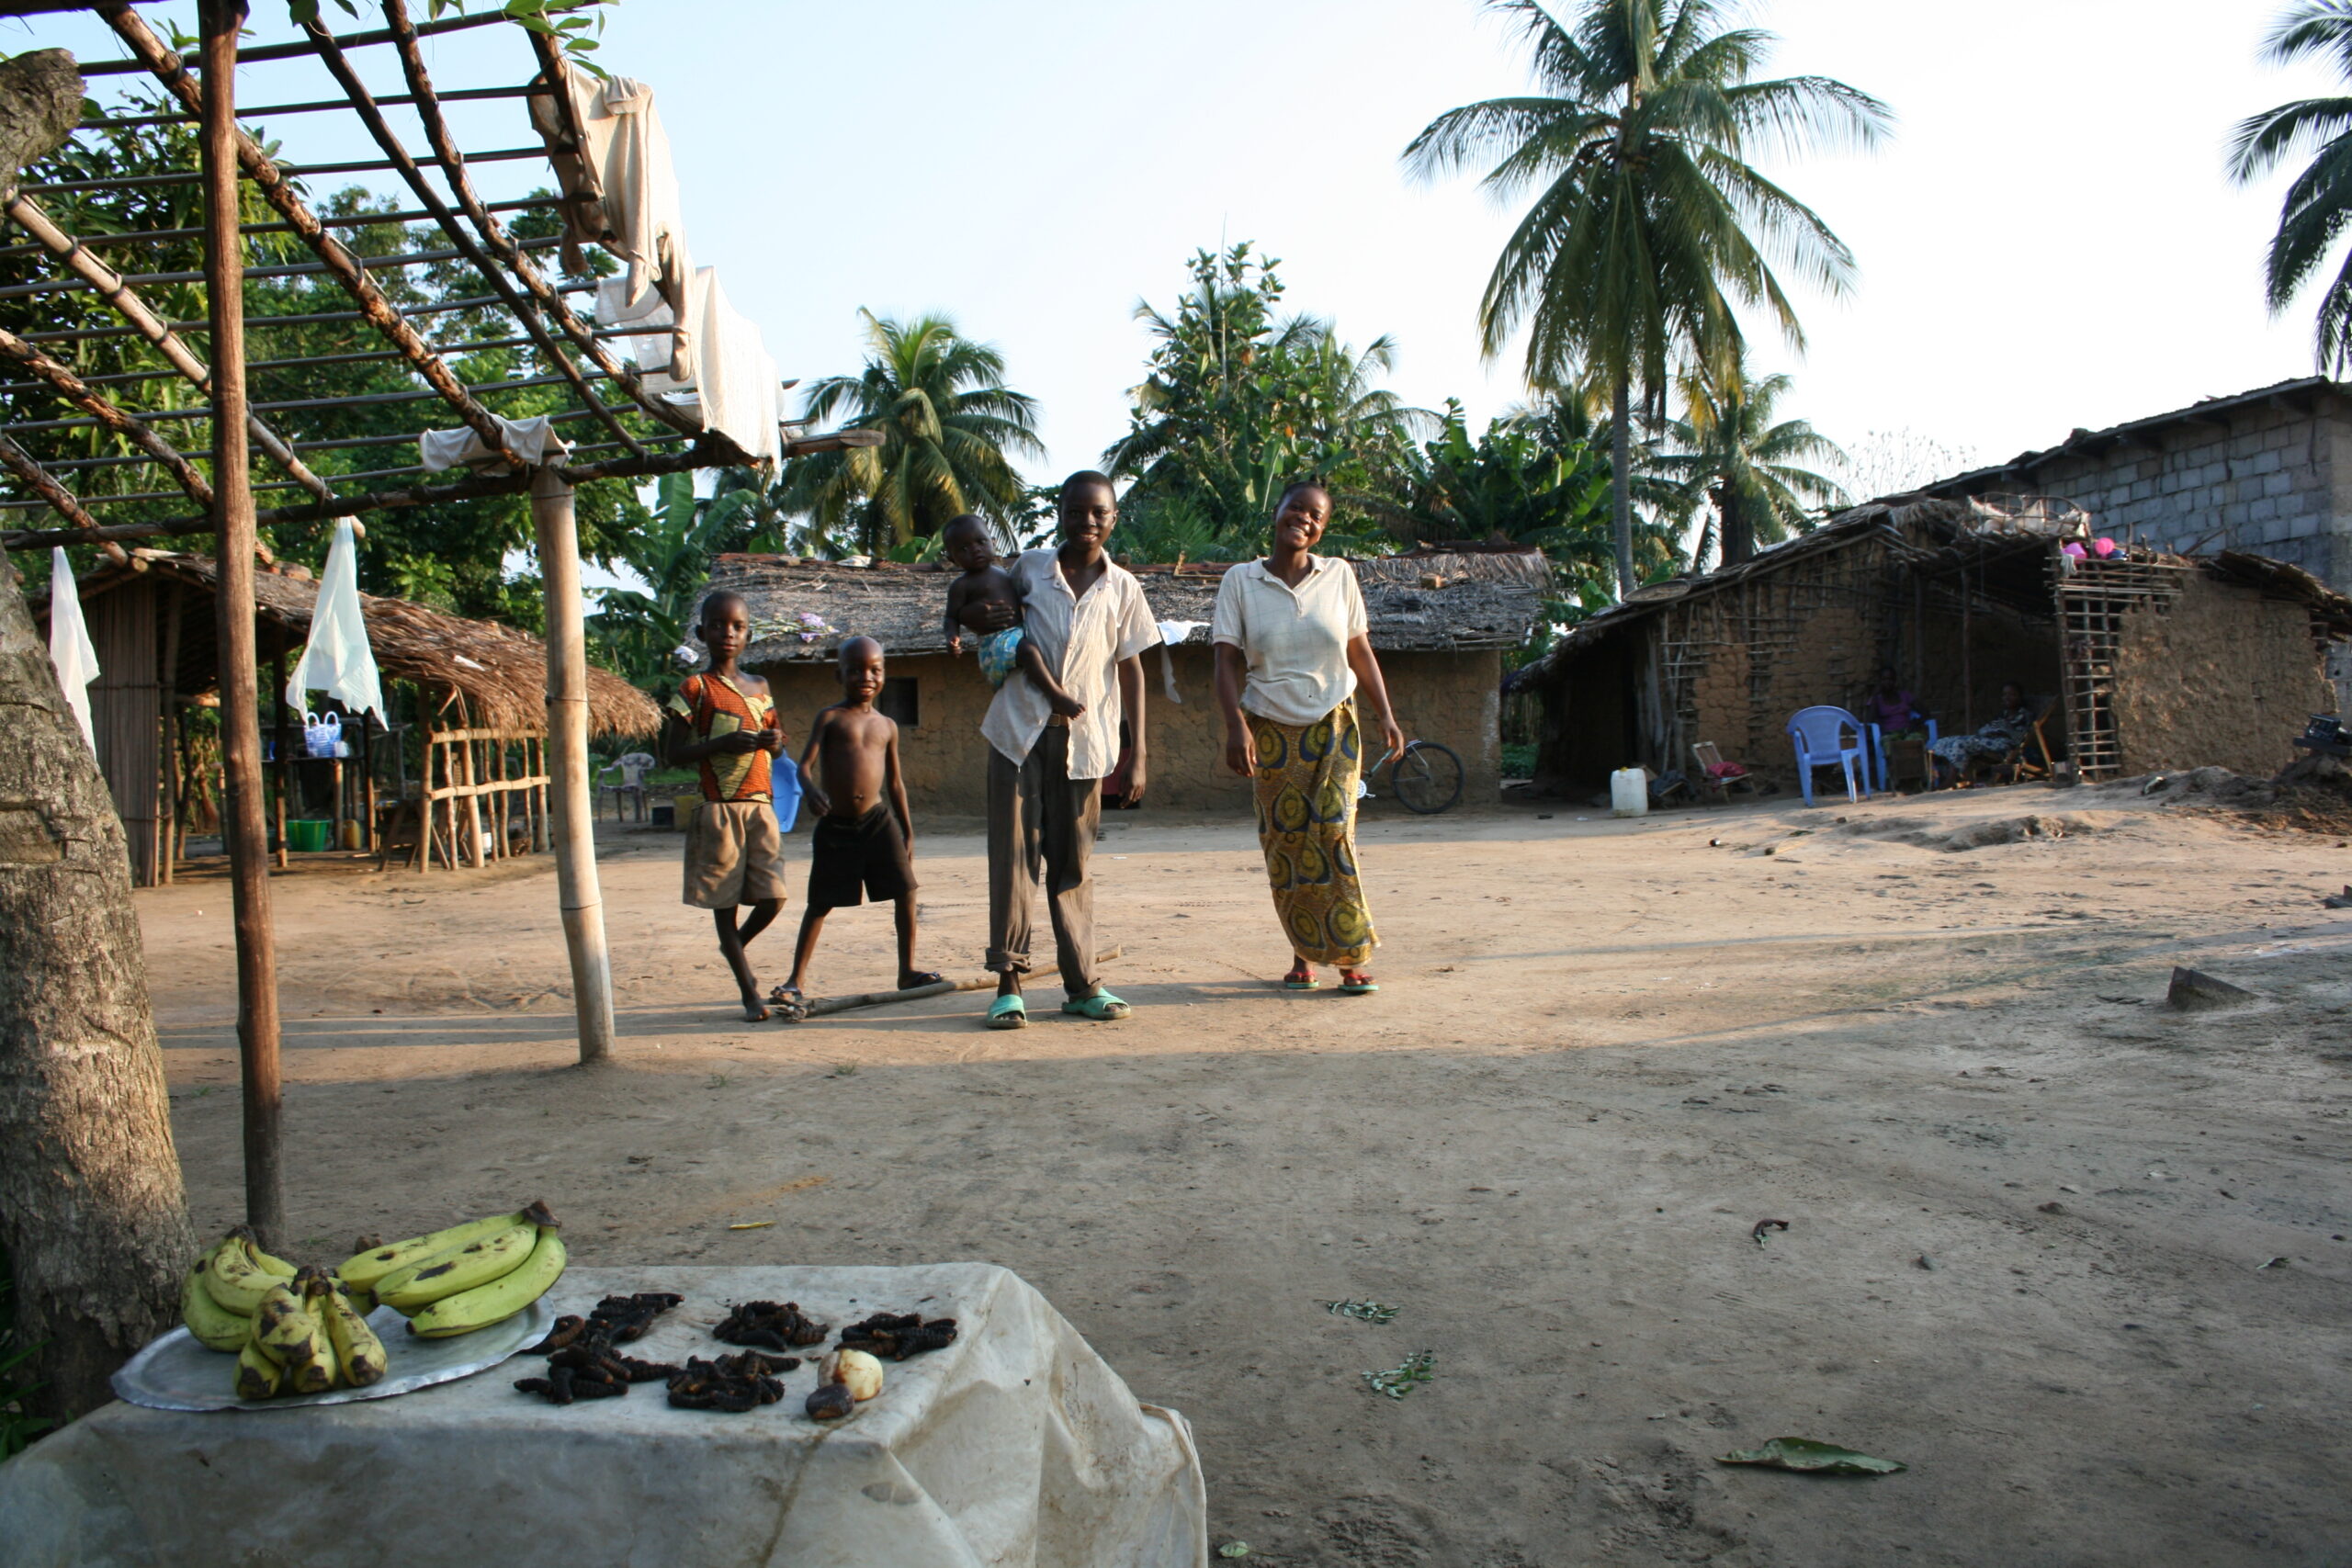 Bumba family selling bananas